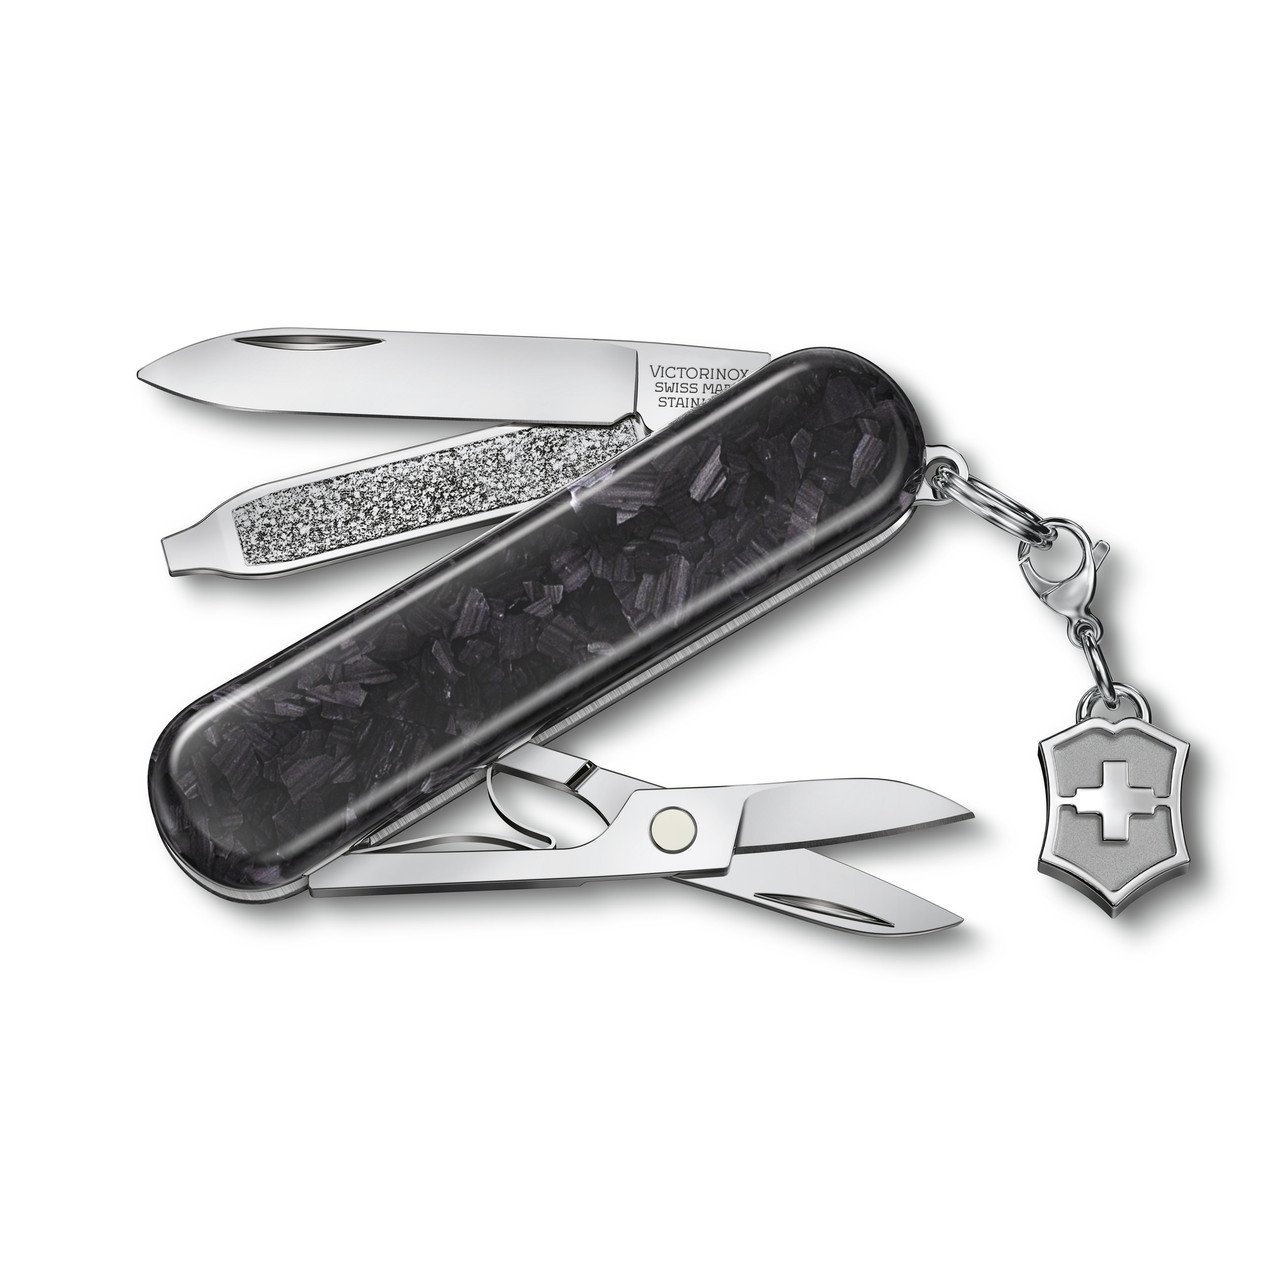 SWISS + TECH Multi-tool Multi-function knife 13-IN-1 Silver NEW from Japan